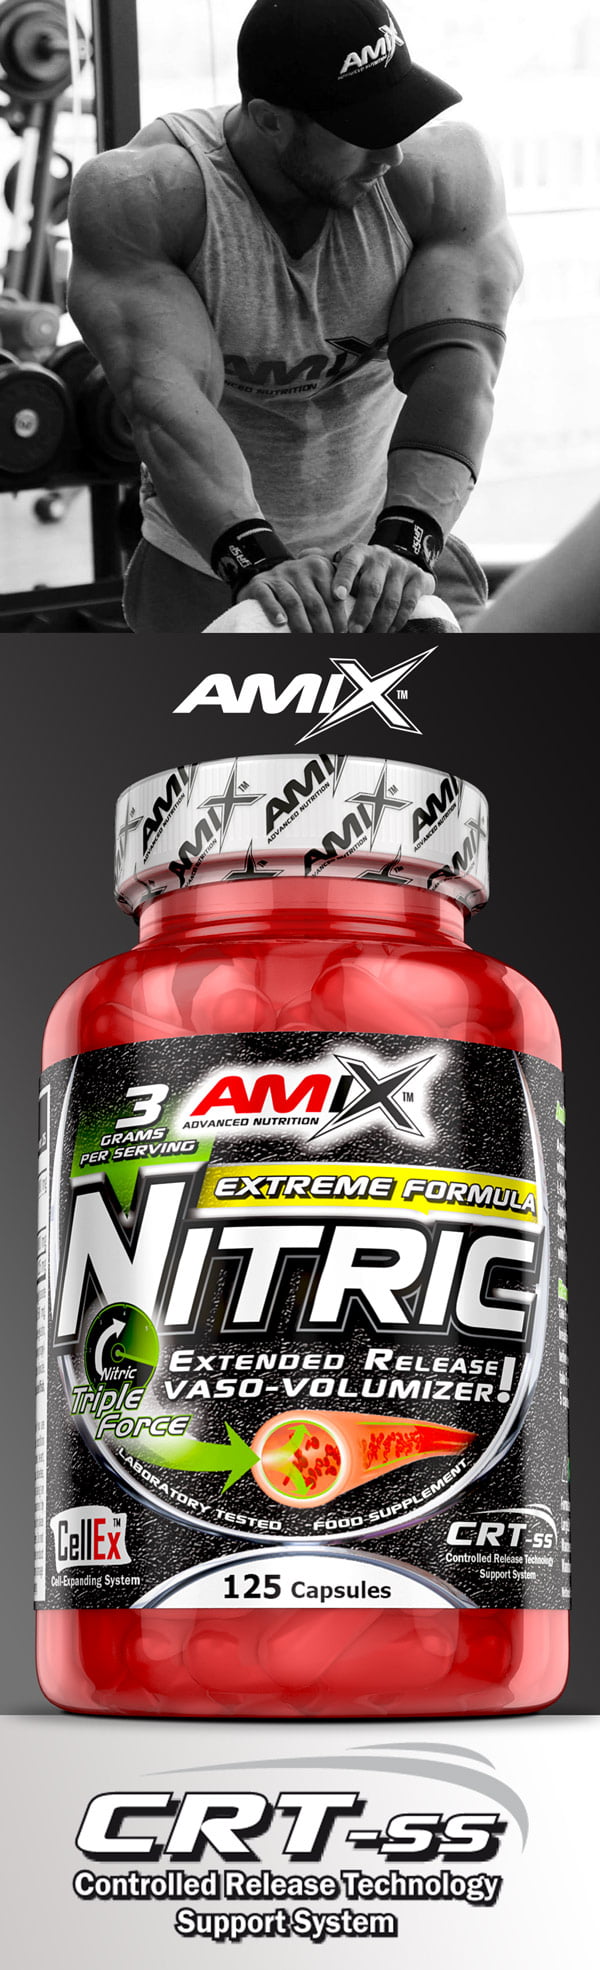 Amix-NItric-baner